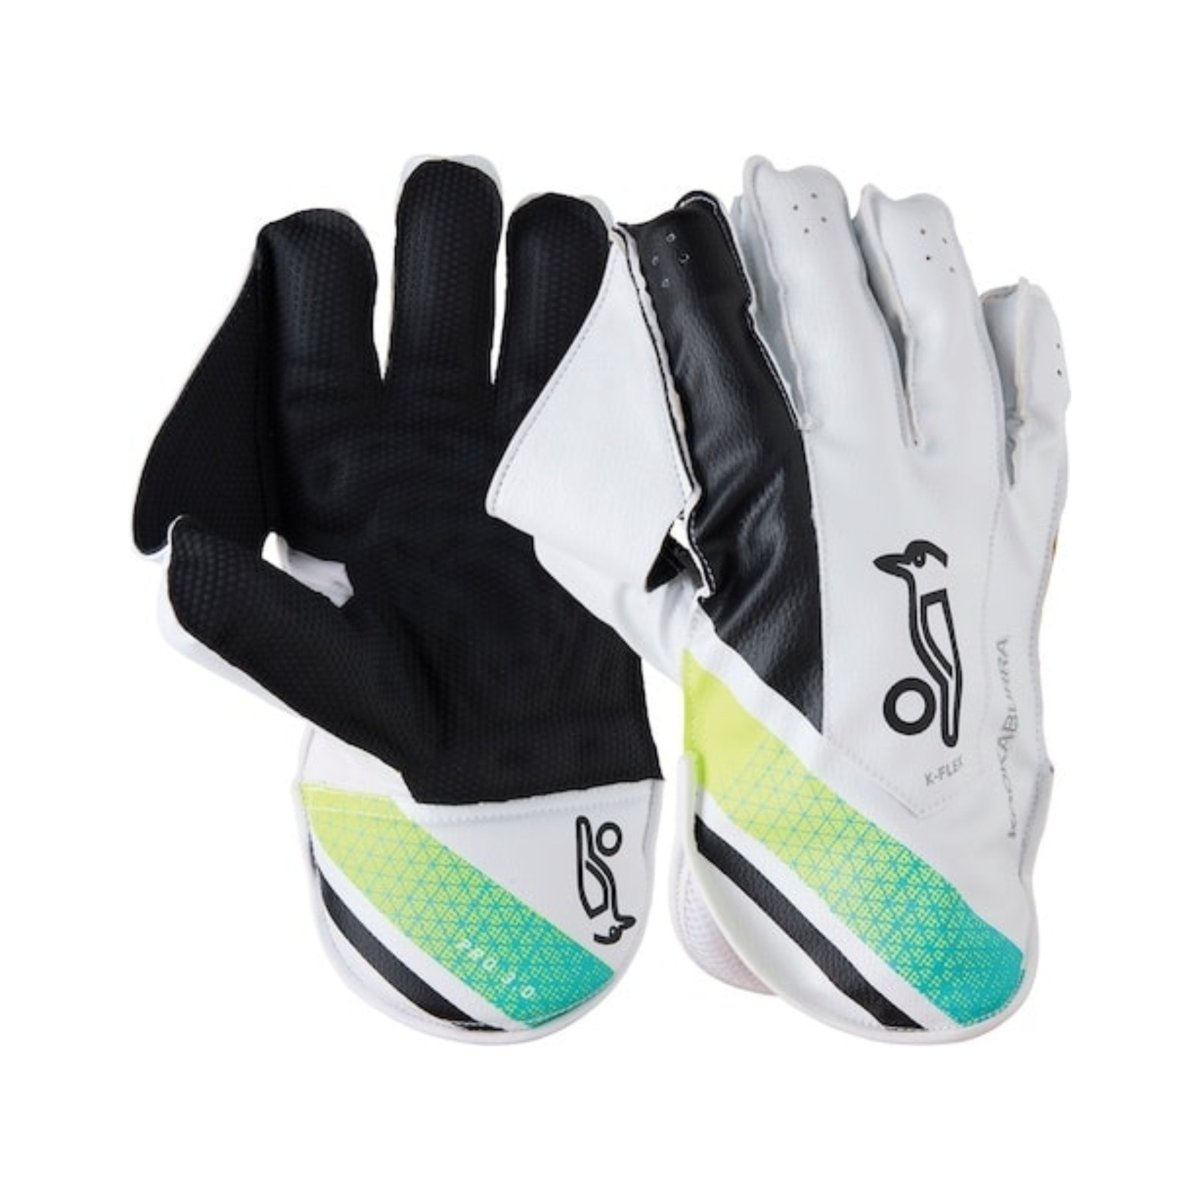 Kookaburra Rapid Pro 3.0 Cricket Wicket Keeping Gloves